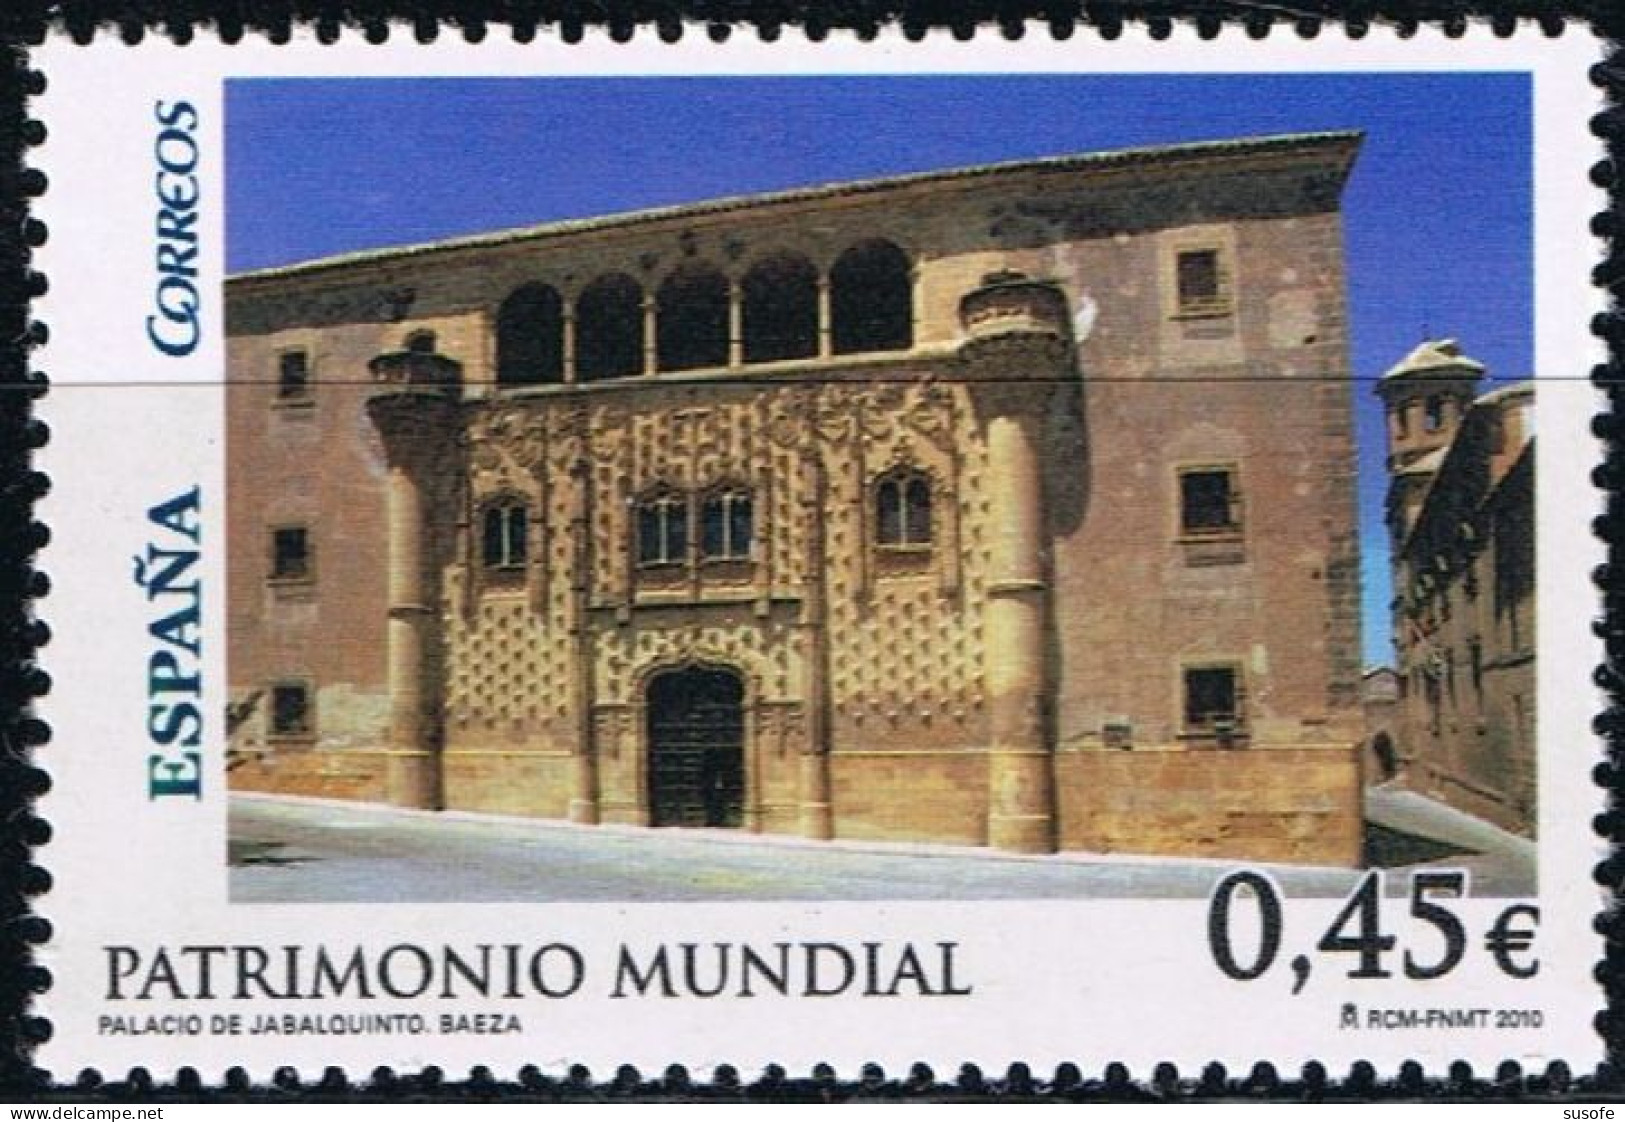 España 2010 Edifil 4557 Sello ** Patrimonio Mundial Palacio De Jabalquinto Baeza (Jaen) Michel 4499 Yvert 4203 Spain - Neufs